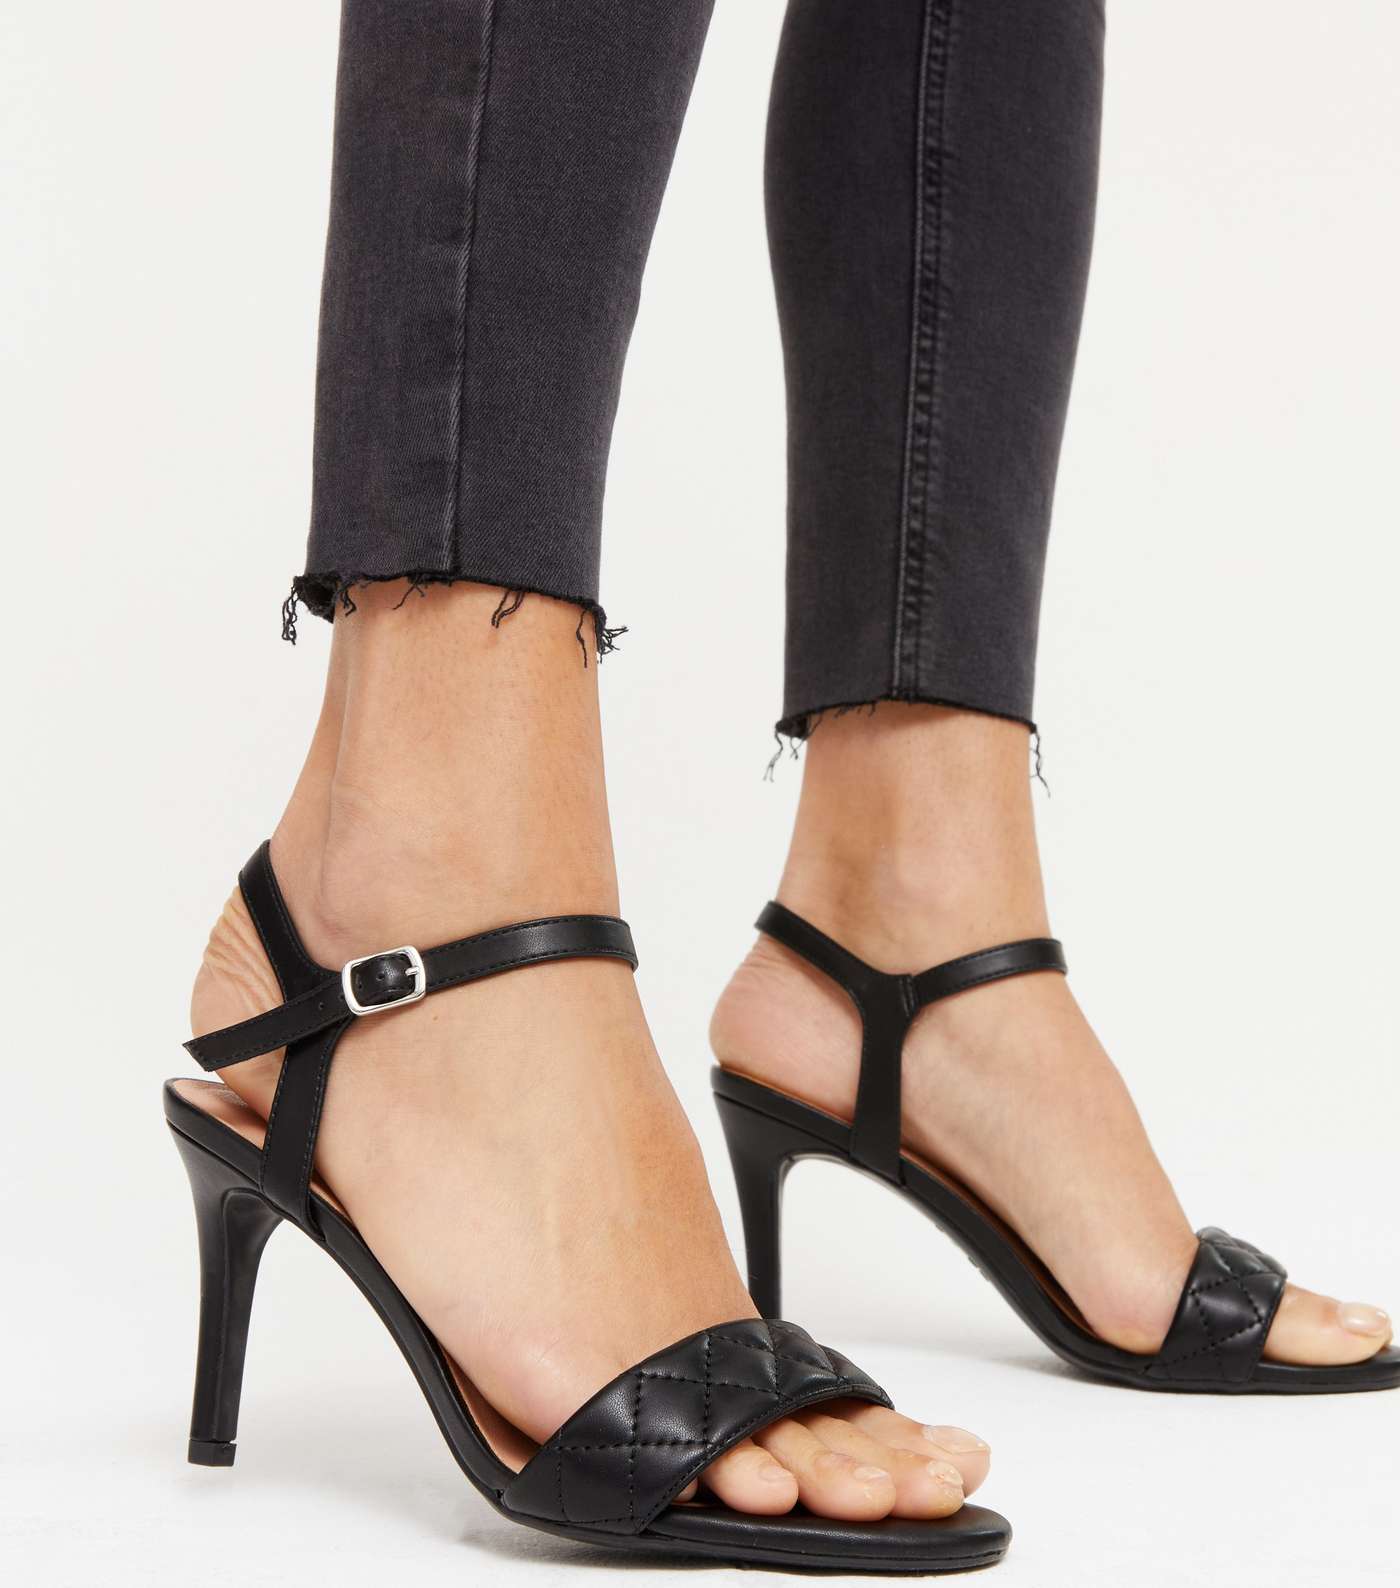 Black Quilted 2 Part Stiletto Heel Sandals Image 2